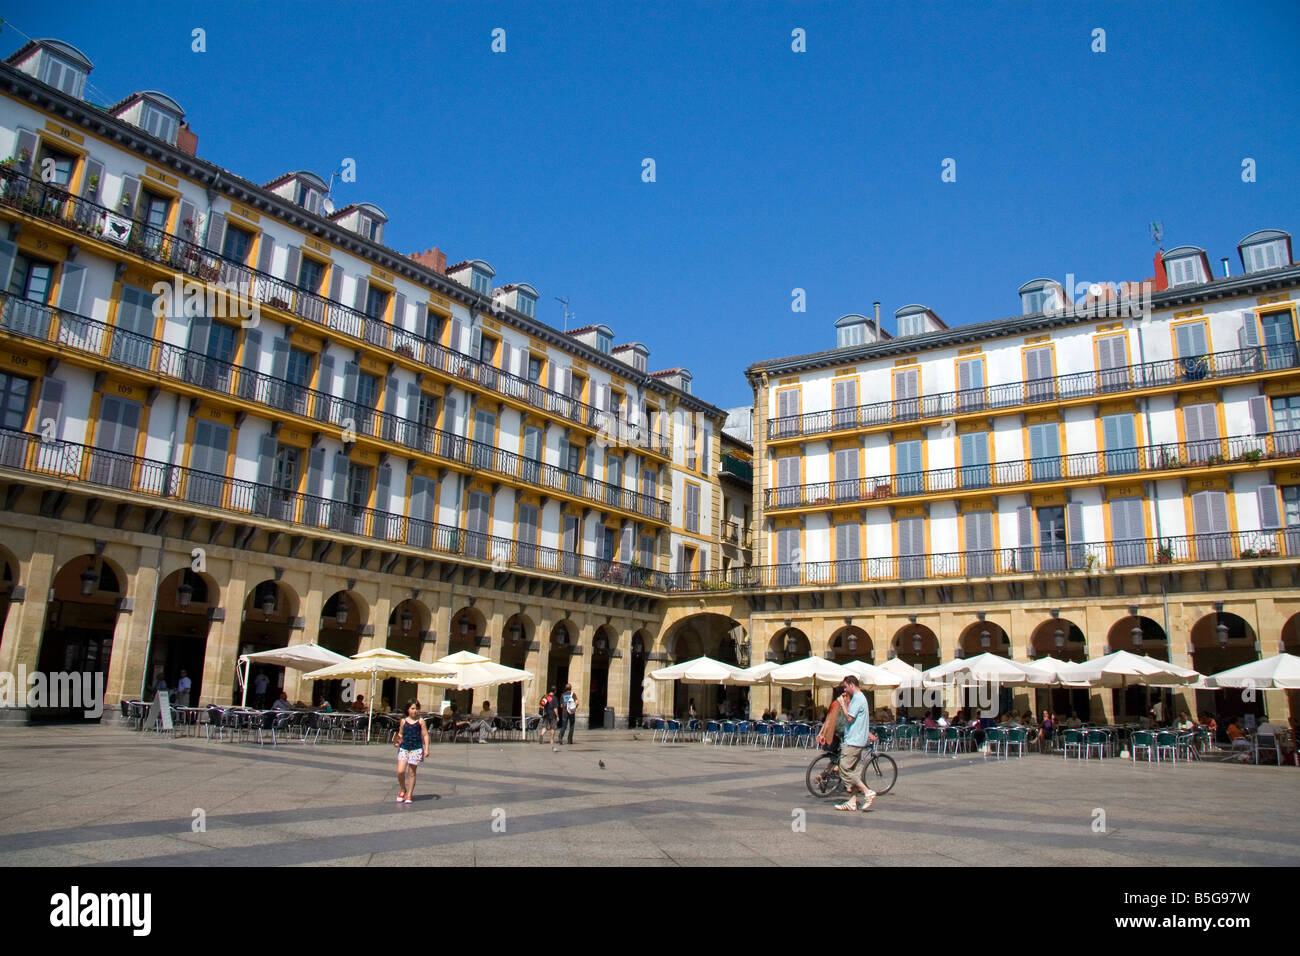 The Plaza de la Constitucion in the city of Donostia San Sebastian Guipuzcoa Basque Country Northern Spain Stock Photo